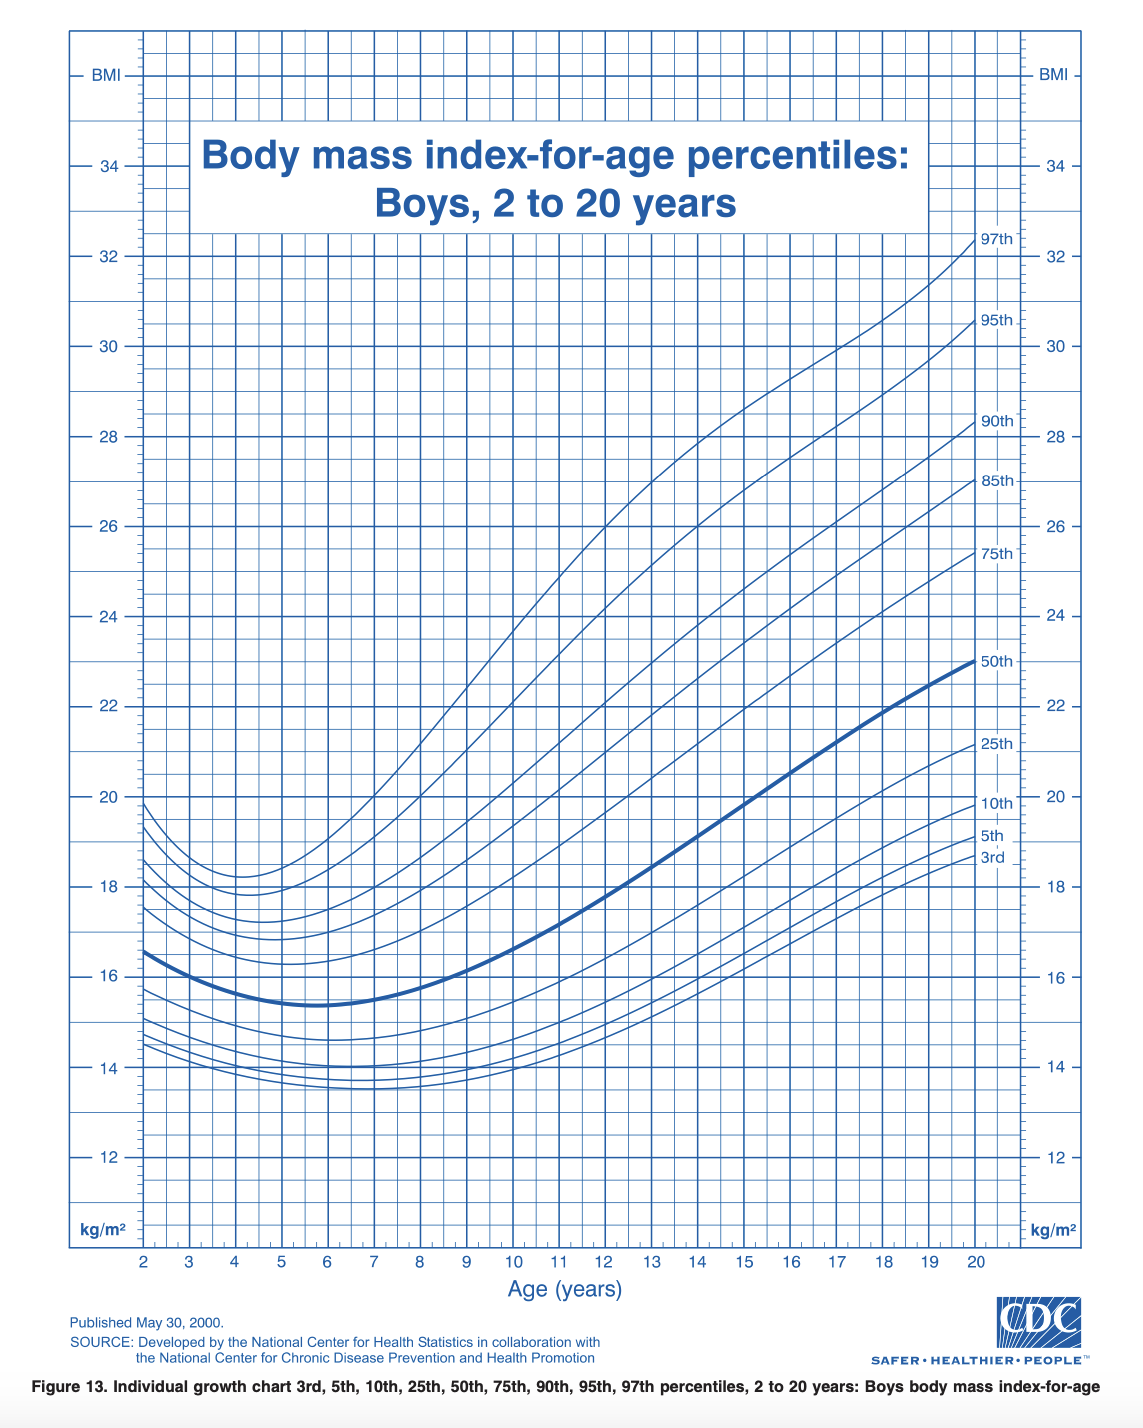 Body Mass Index (BMI) for boys